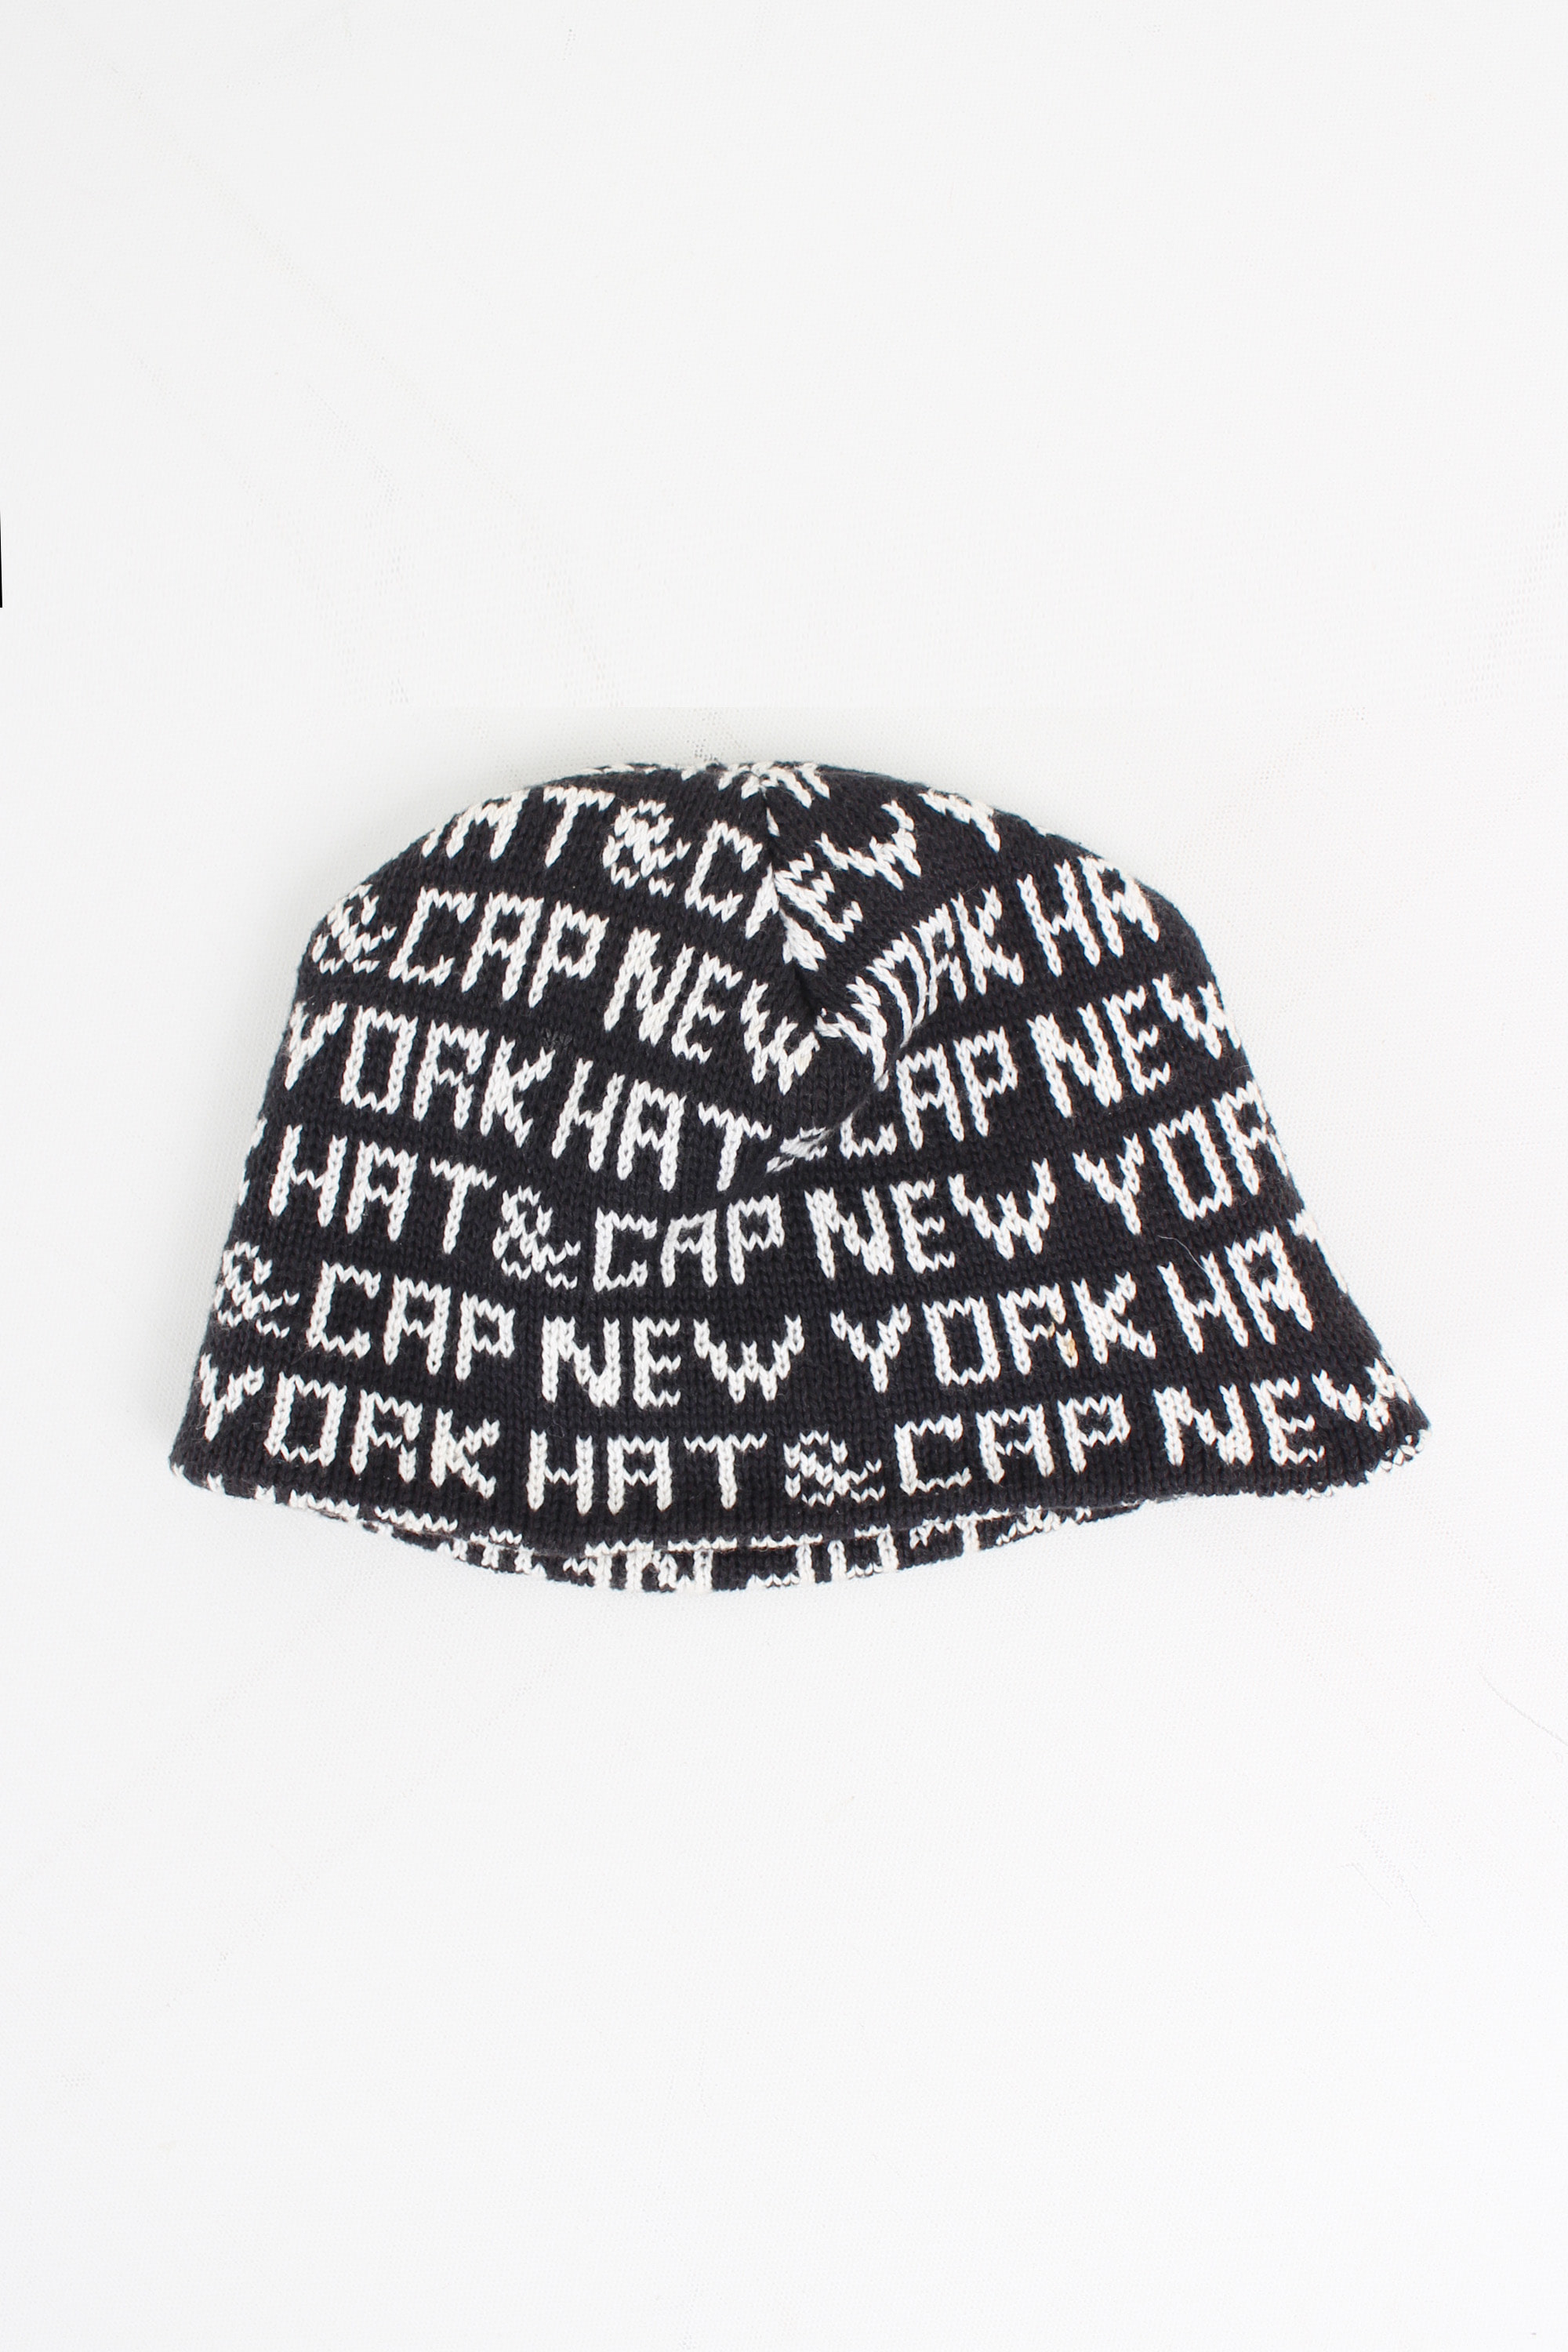 New York Hat Co beanie